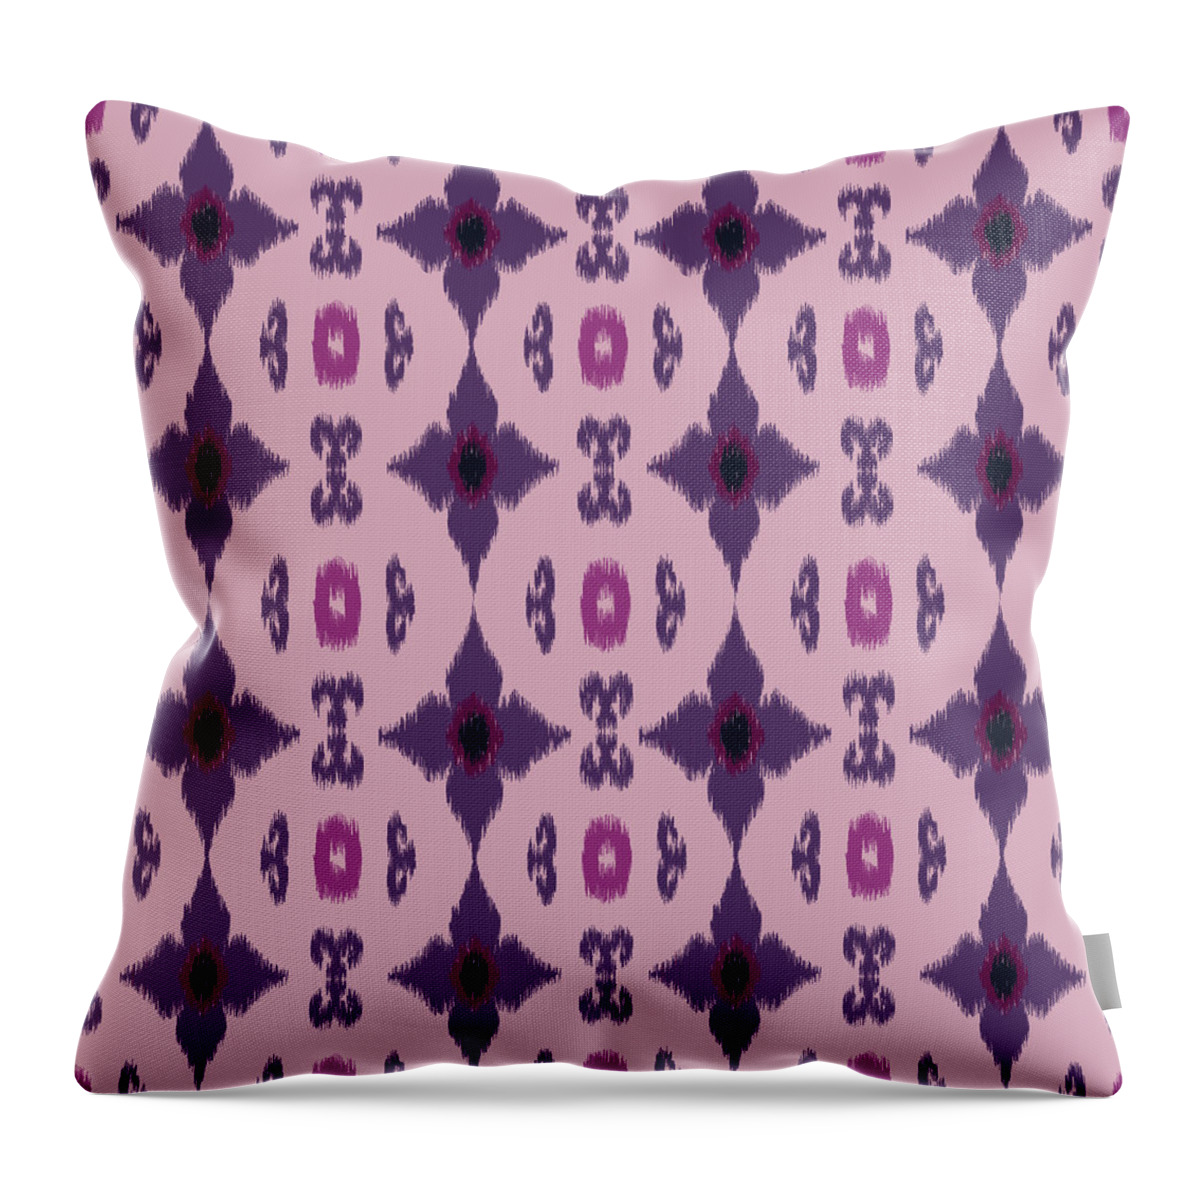 Pattern Throw Pillow featuring the digital art Ikat Flower Pattern - Violet by Studio Grafiikka